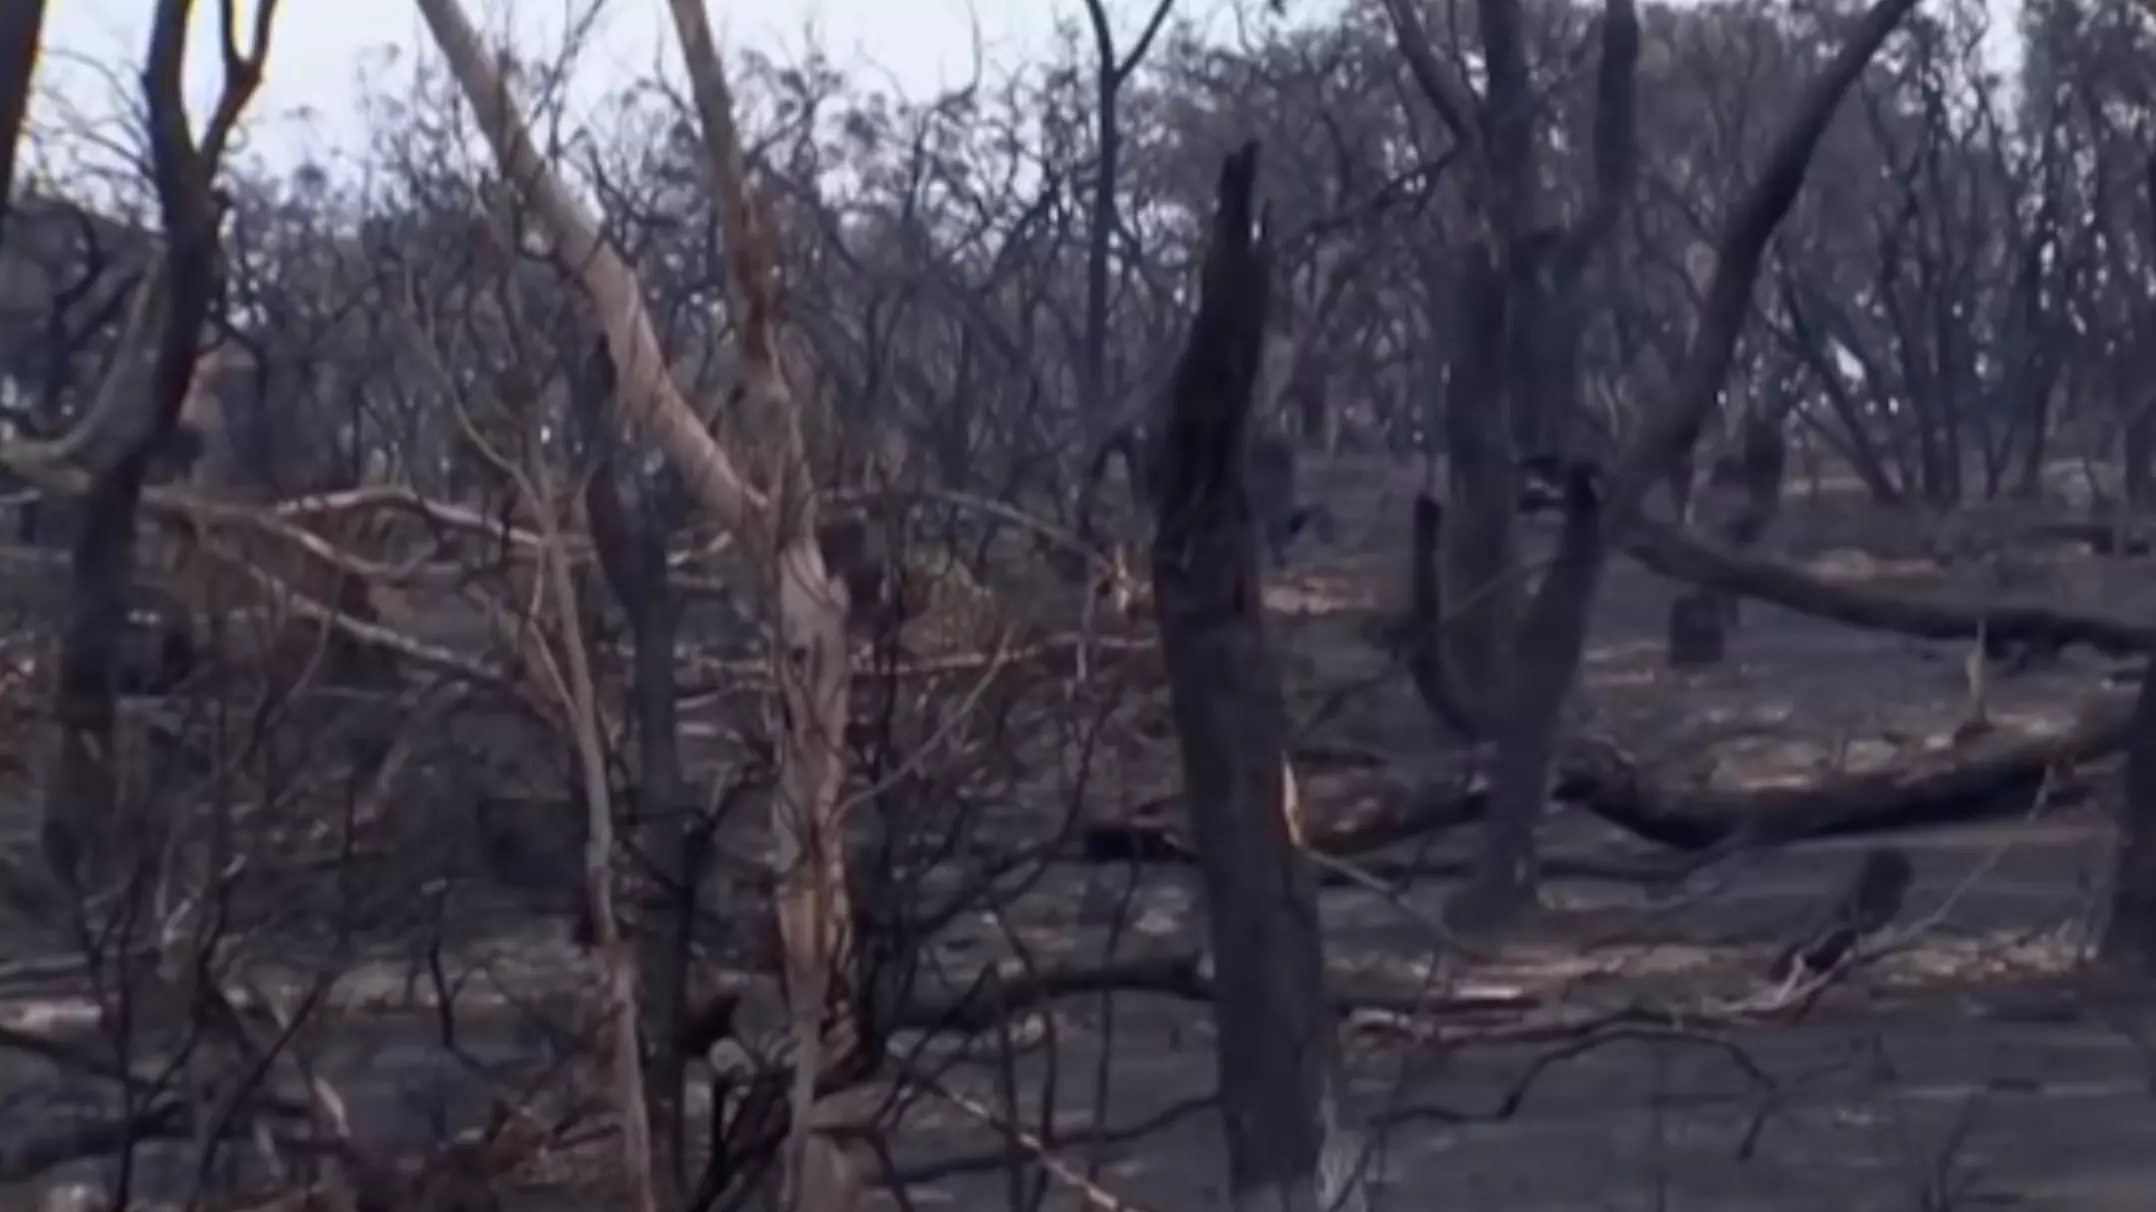 Kangaroo Island Bushfire Is Finally Contained After Three Long Weeks